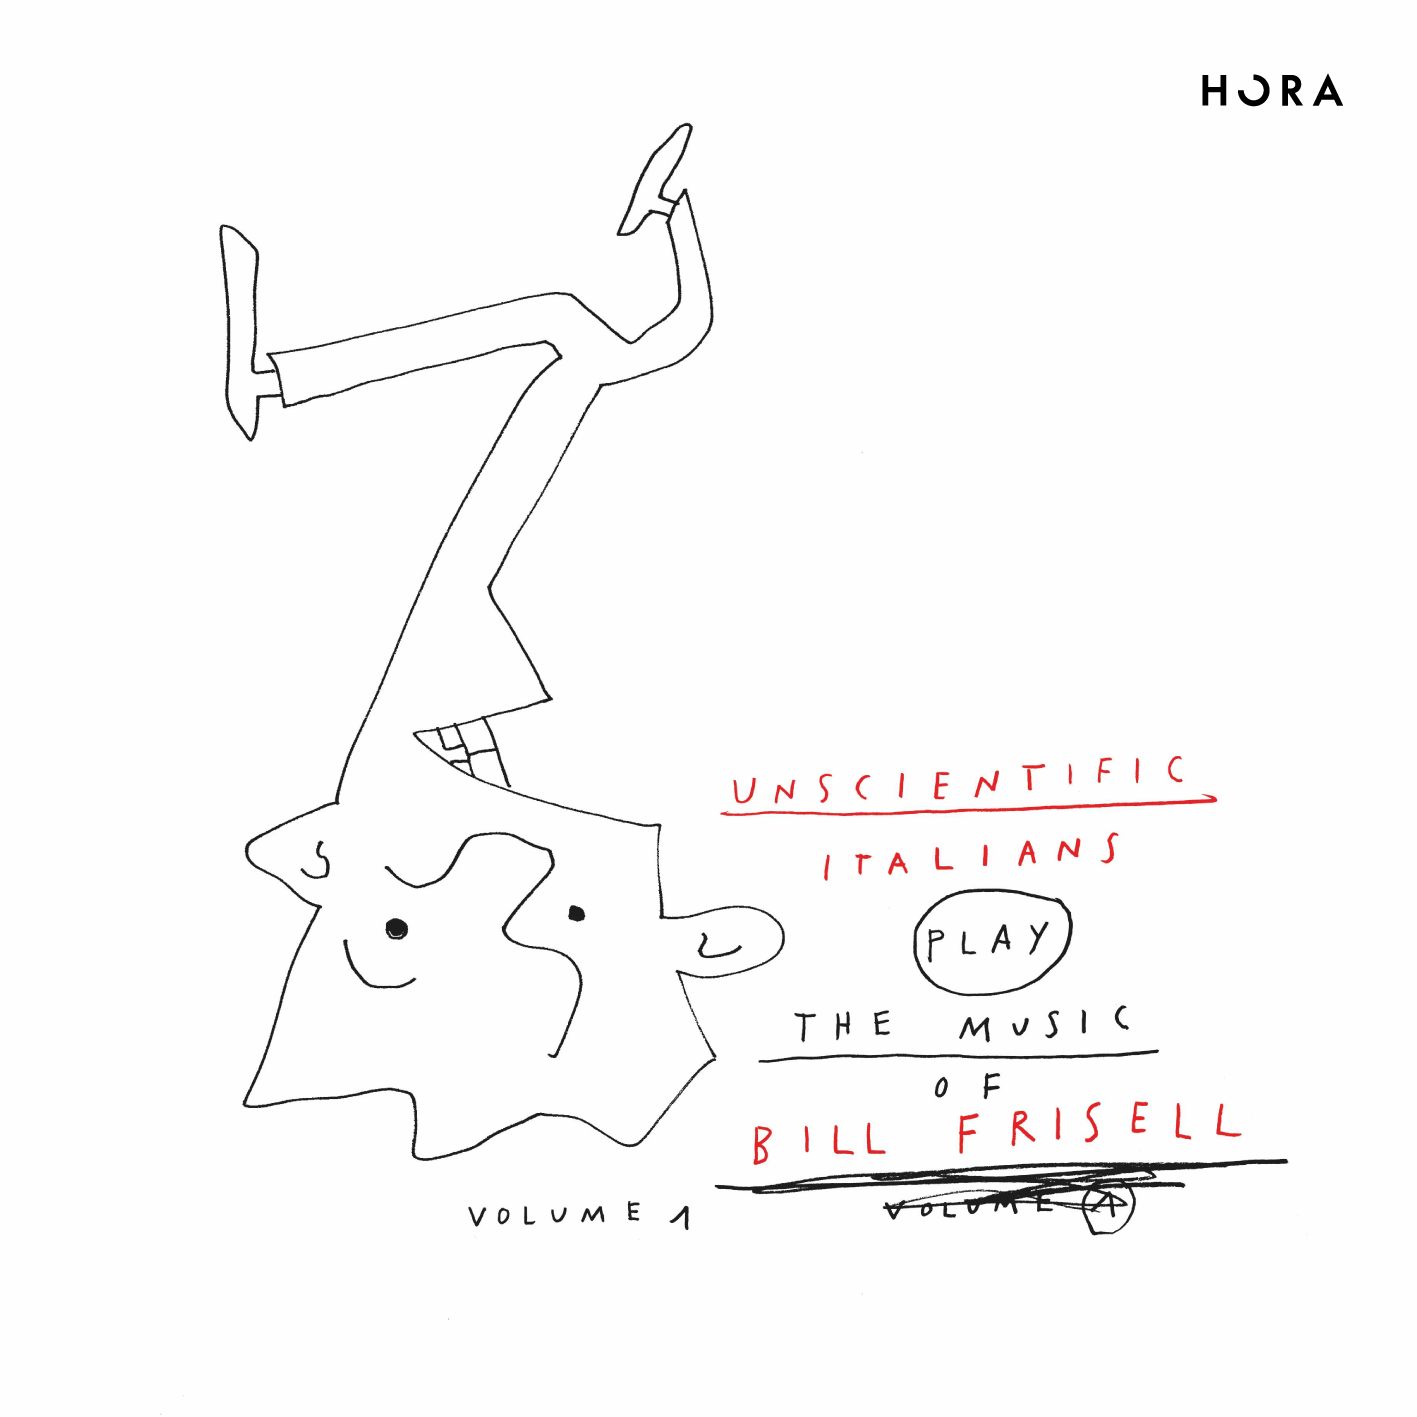 Unscientific Italians - Play The Music of Bill Frisell Vol. 1